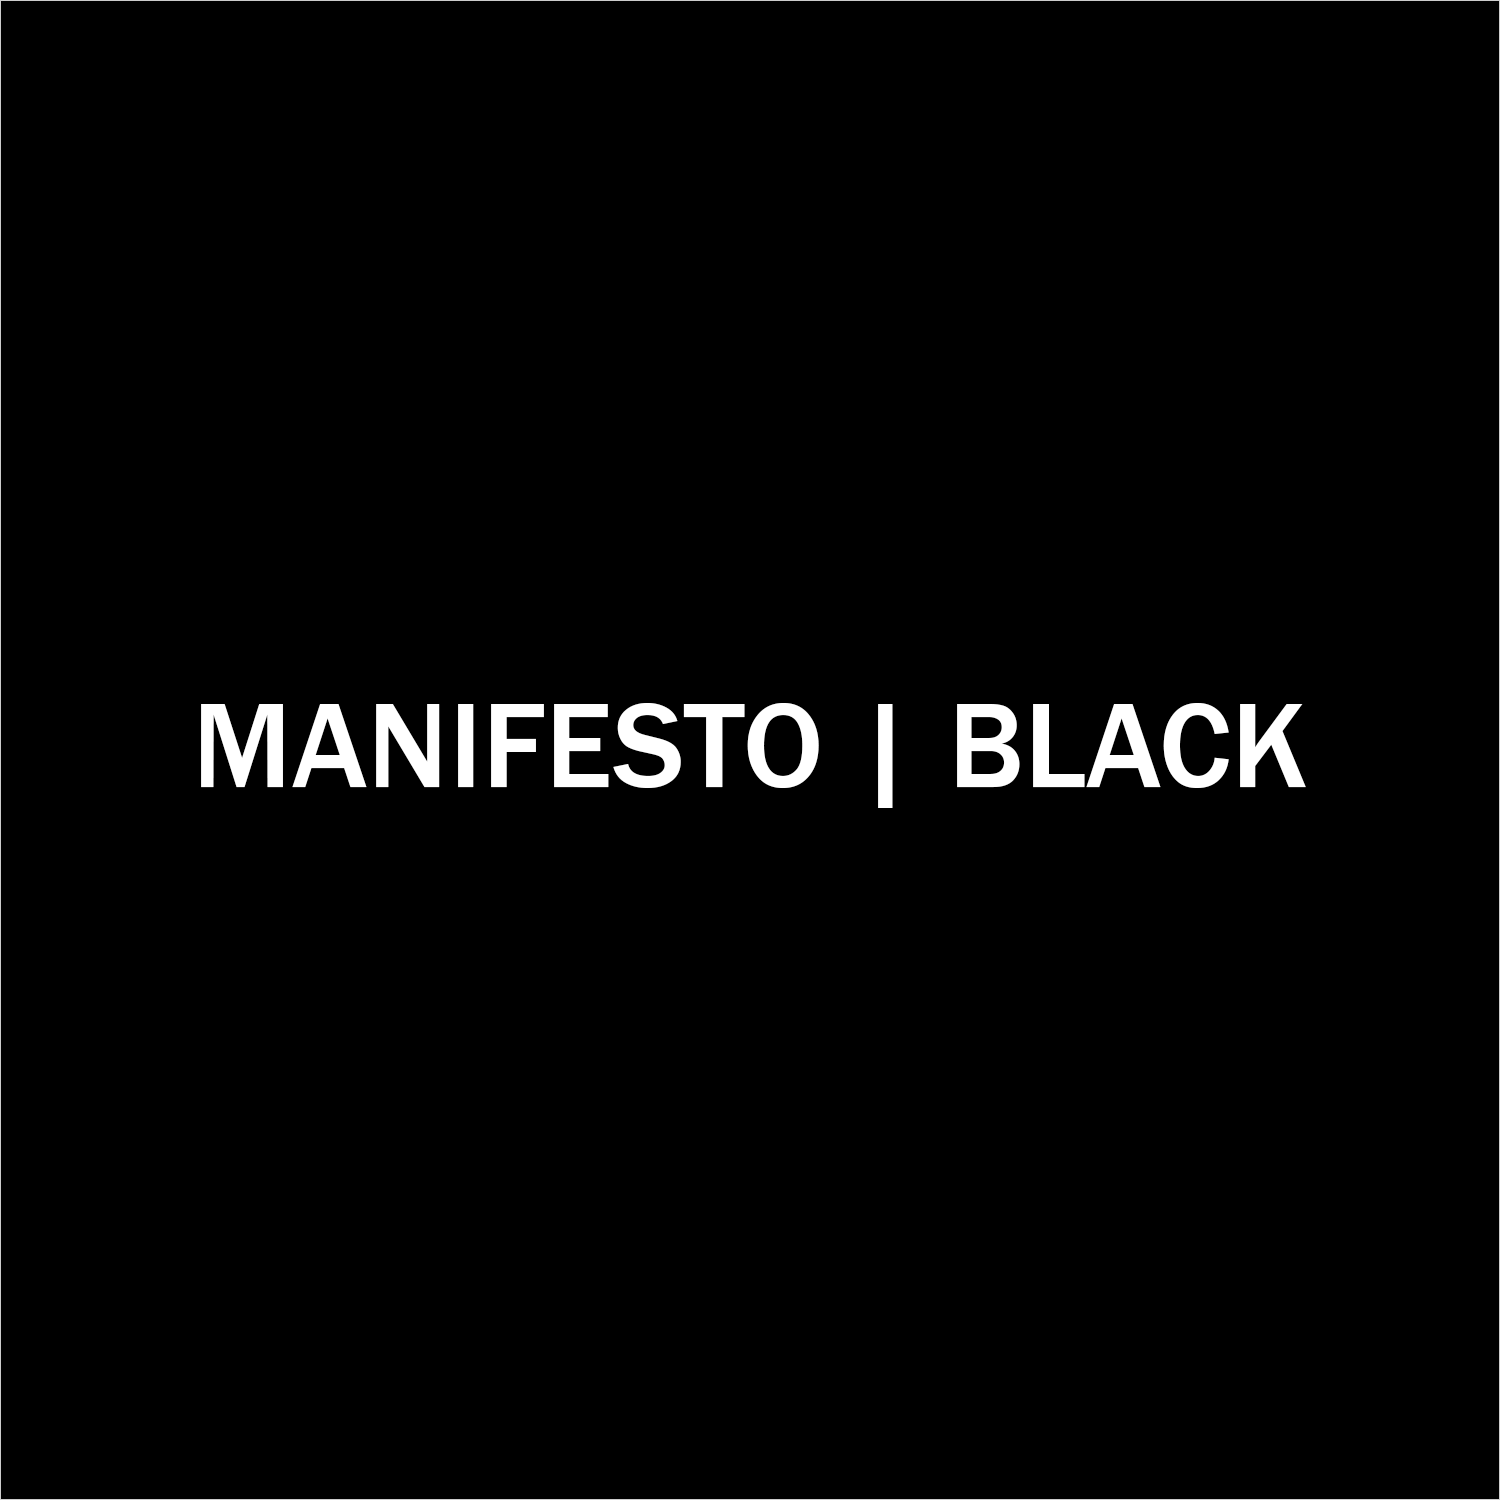 MANIFESTO | BLACK